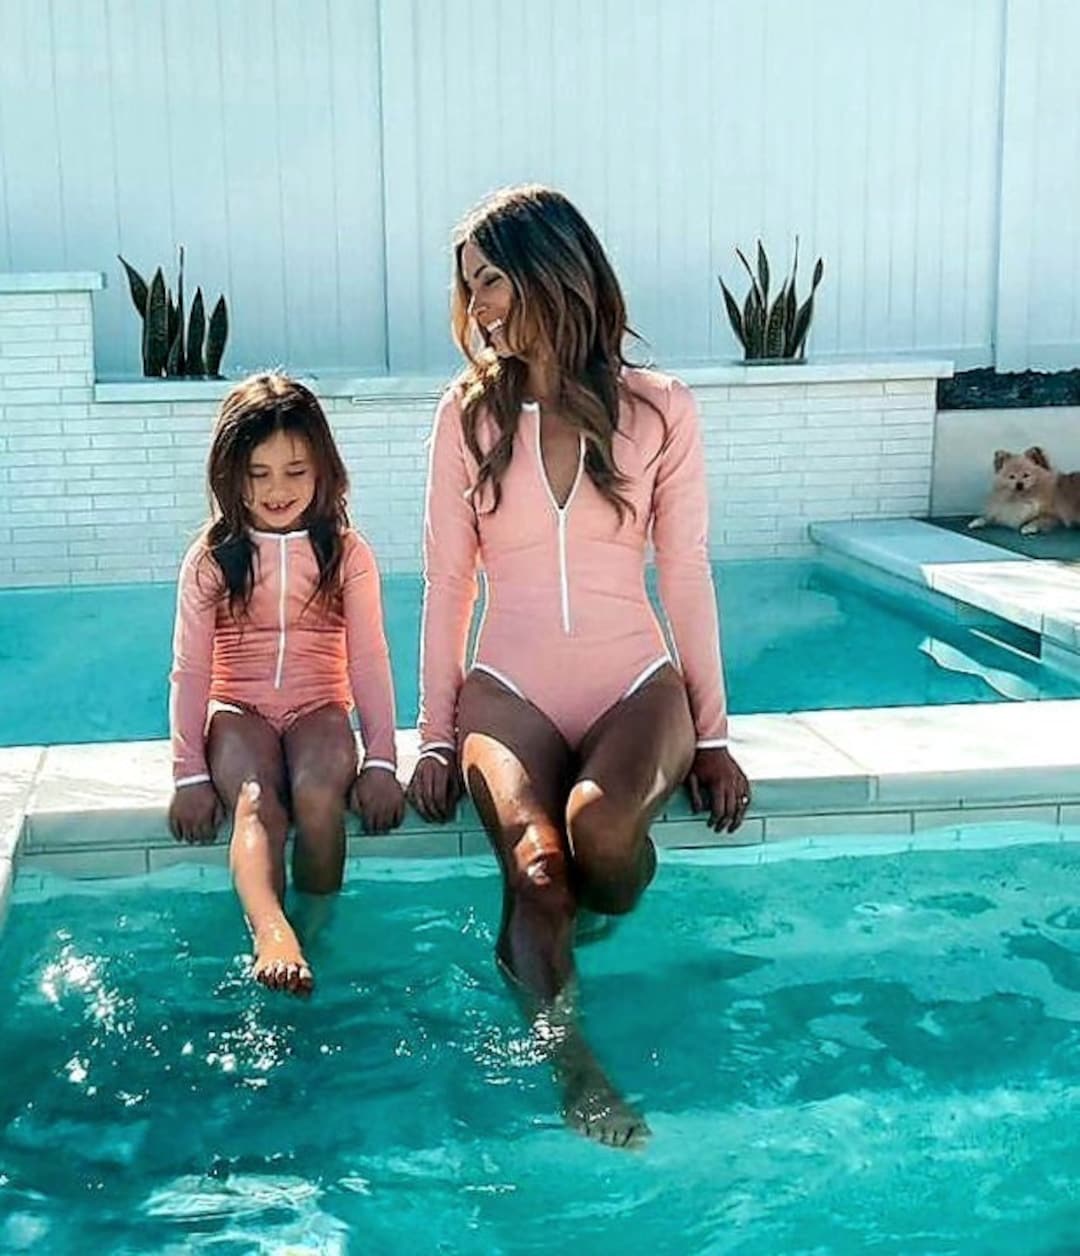 Matching Family Crochet Bikini Swimwear Mother Daughter Tankini